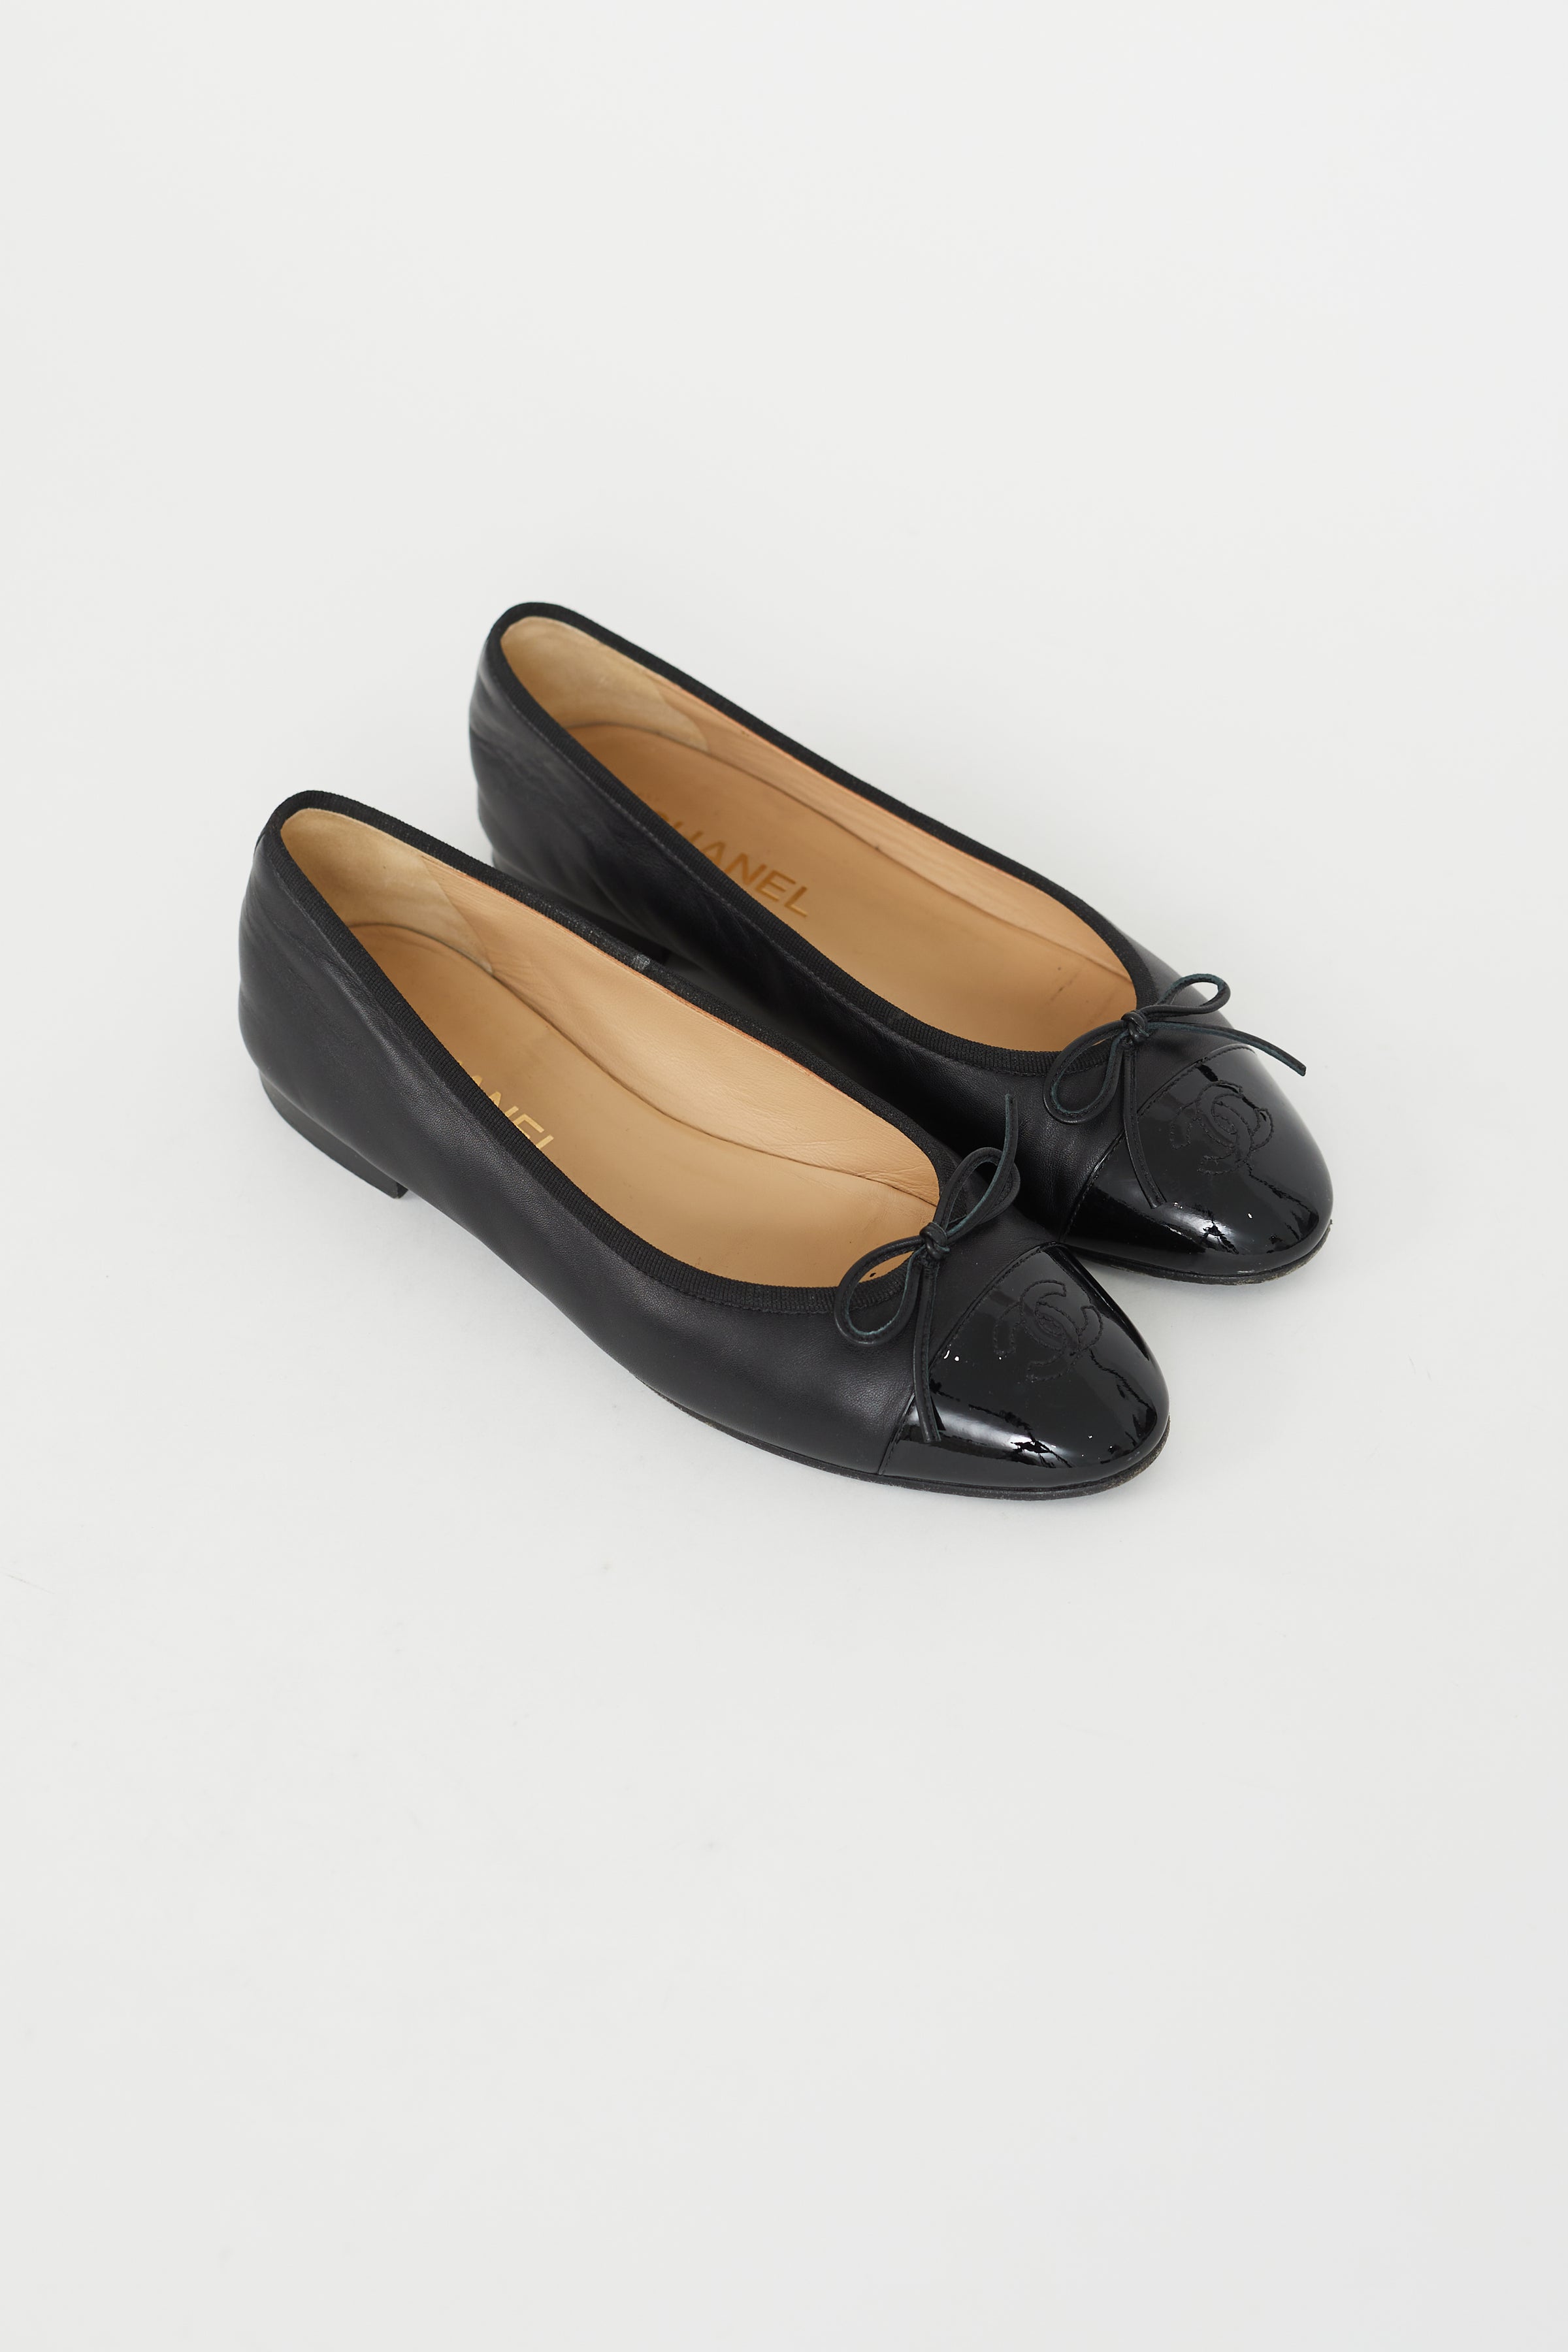 ‘Sold’ CHANEL White Leather Black CC Cap Toe Bow Ballet Flats Ballerinas 40  FUC